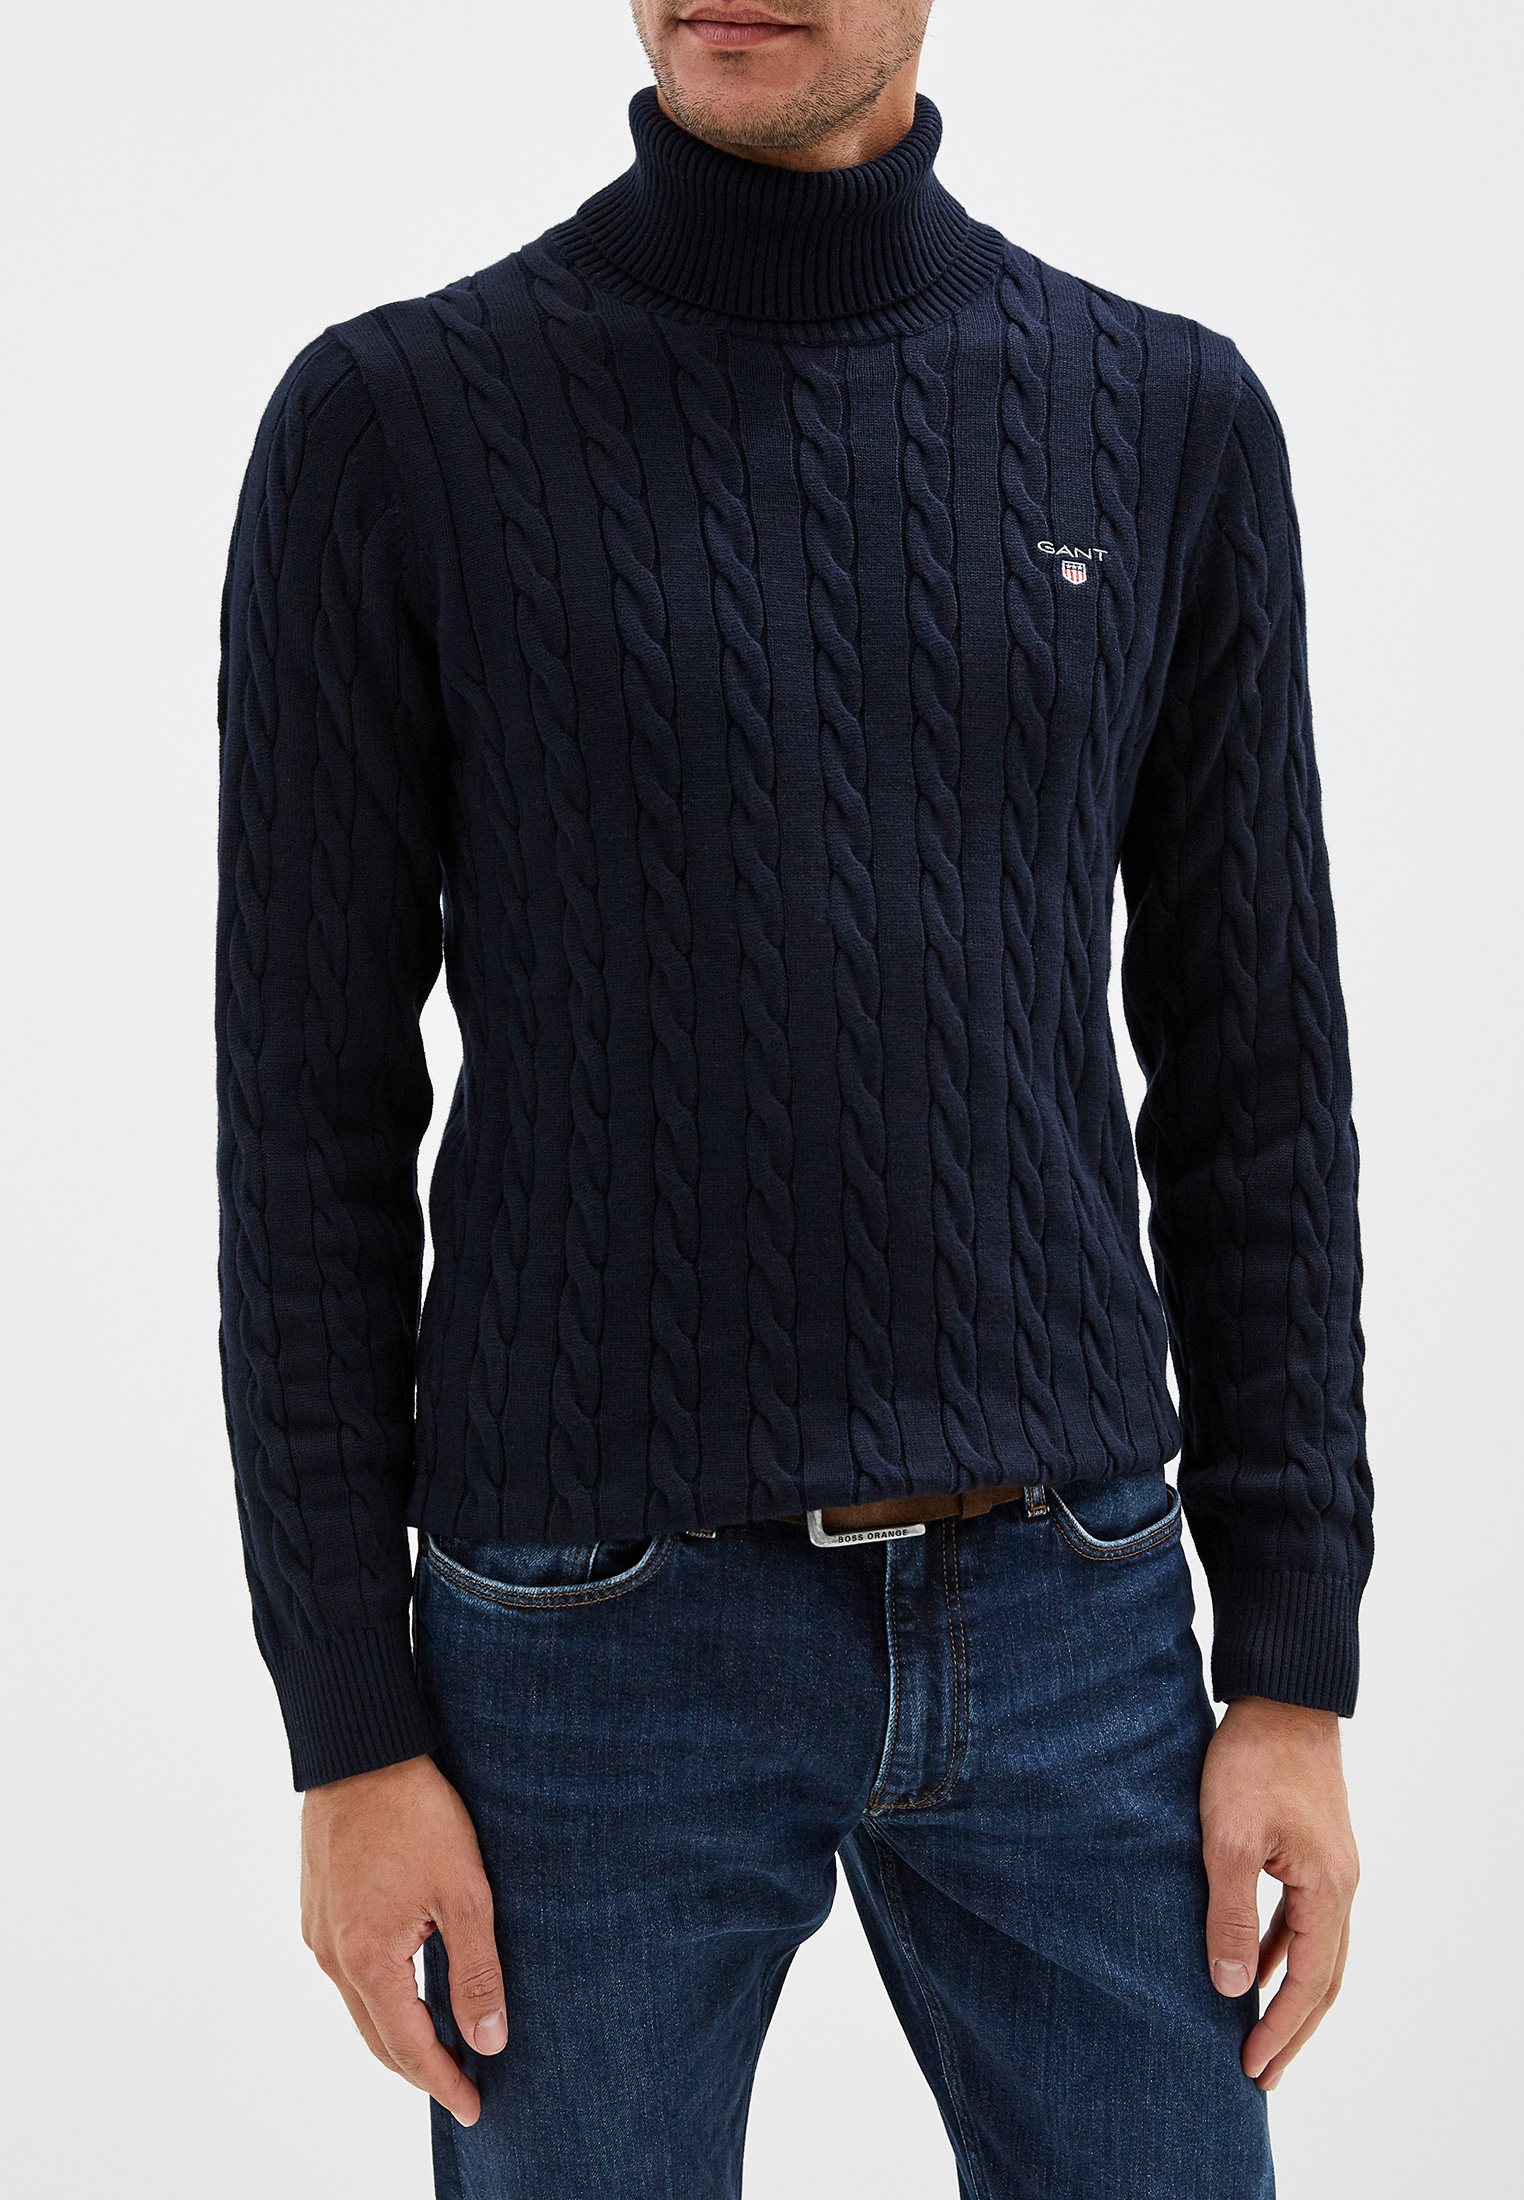 Мужской свитер спб. Пуловер Гант мужской. Gant пуловер мужской. Пуловер мужской Gant синий. Джемпер для мужчин Гант.